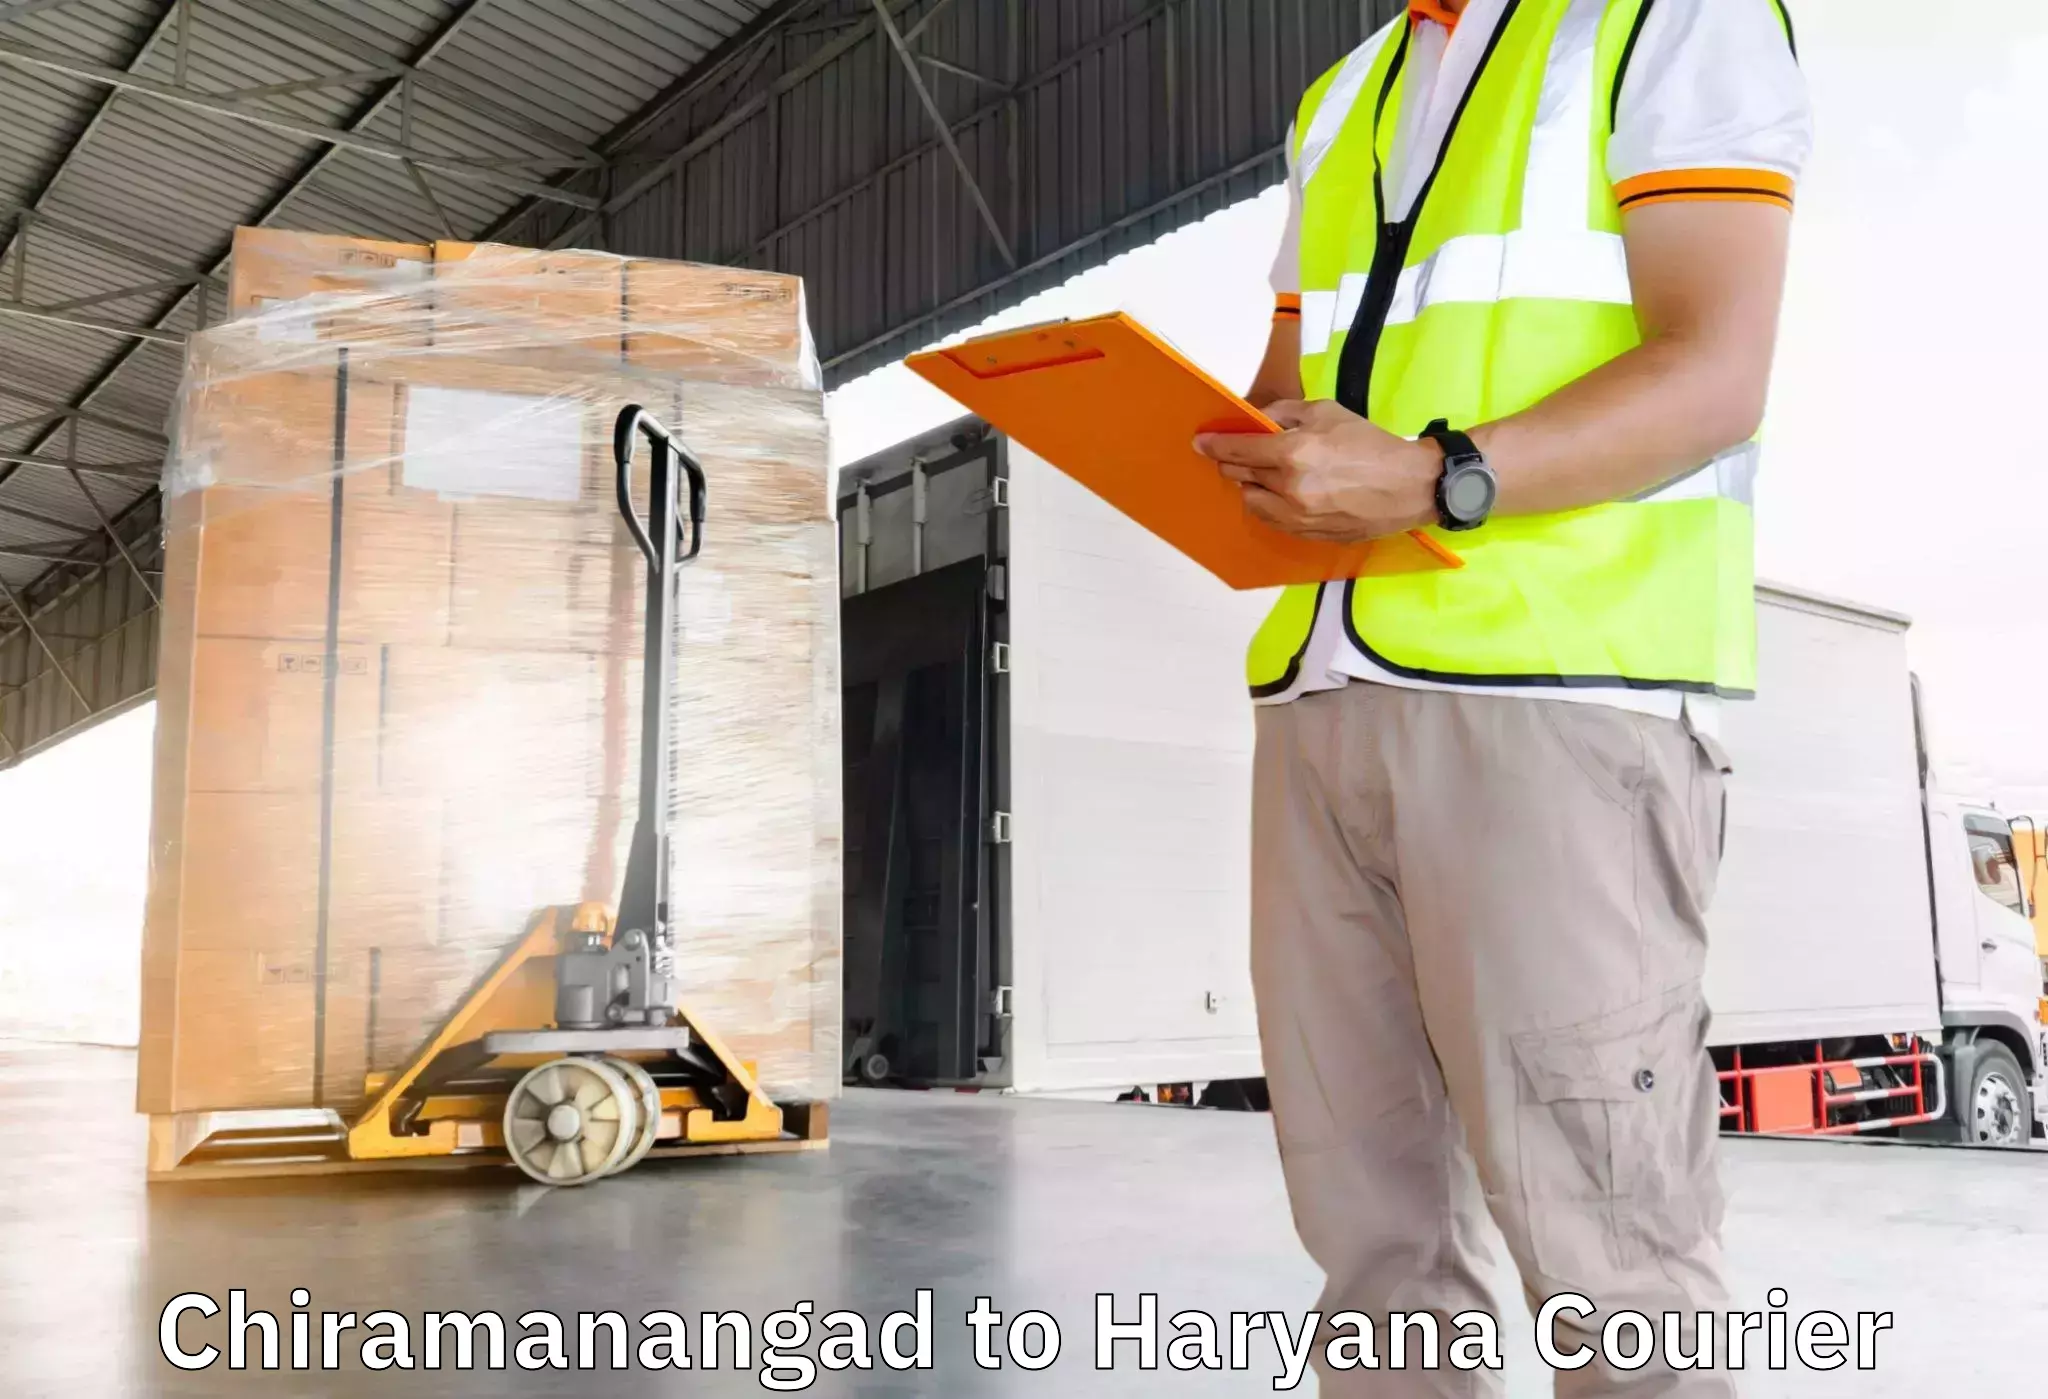 Moving and packing experts Chiramanangad to NCR Haryana